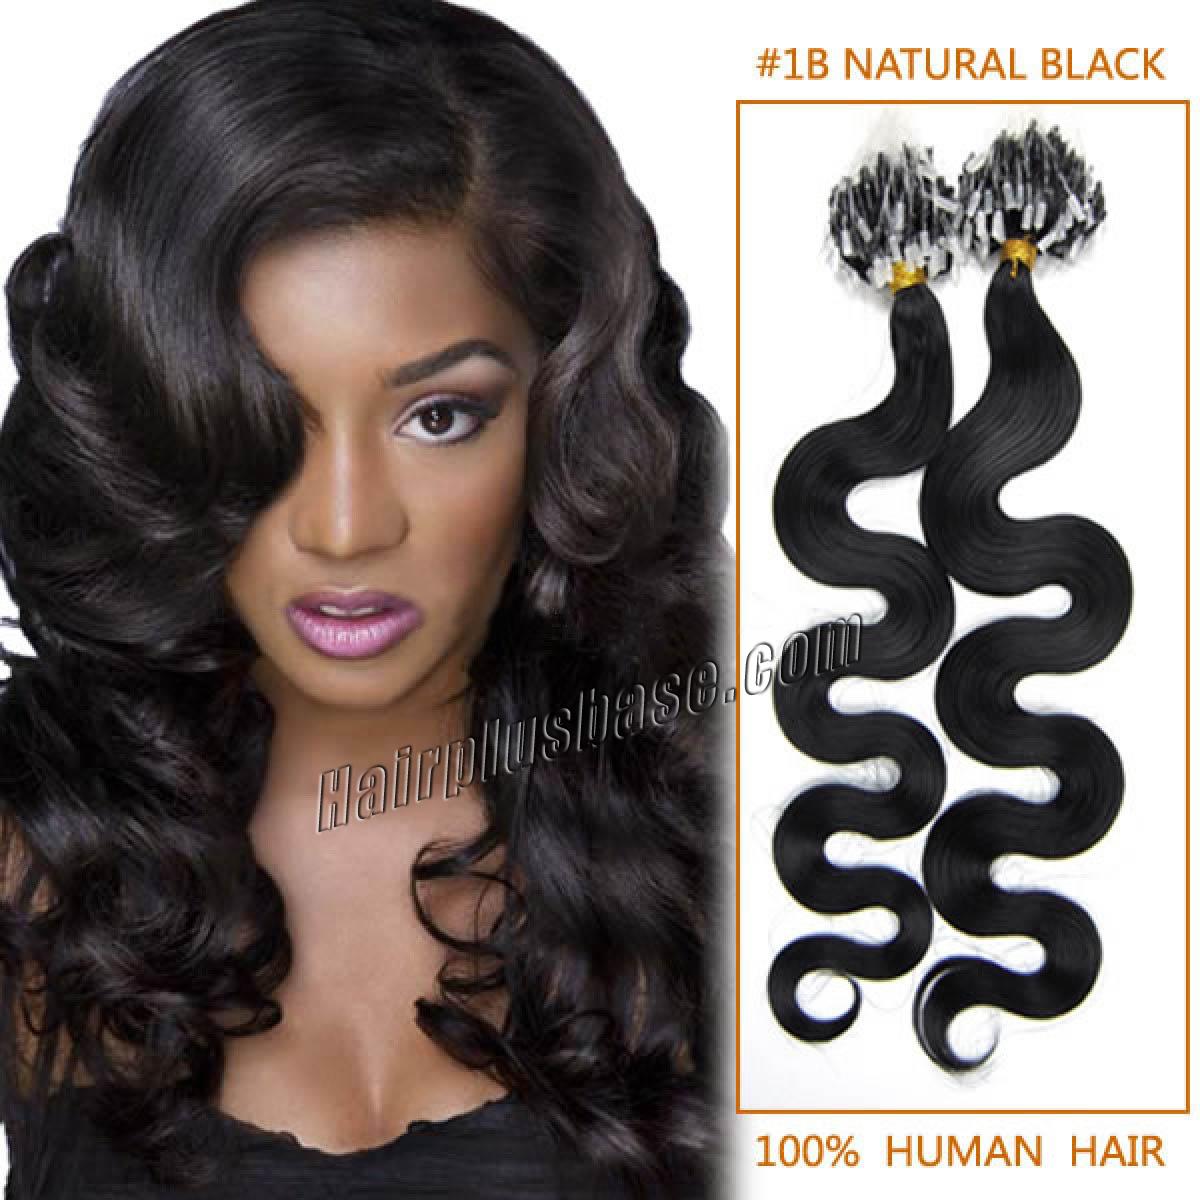 Inch 1b Natural Black Wavy Micro Loop Human Hair Extensions 100S